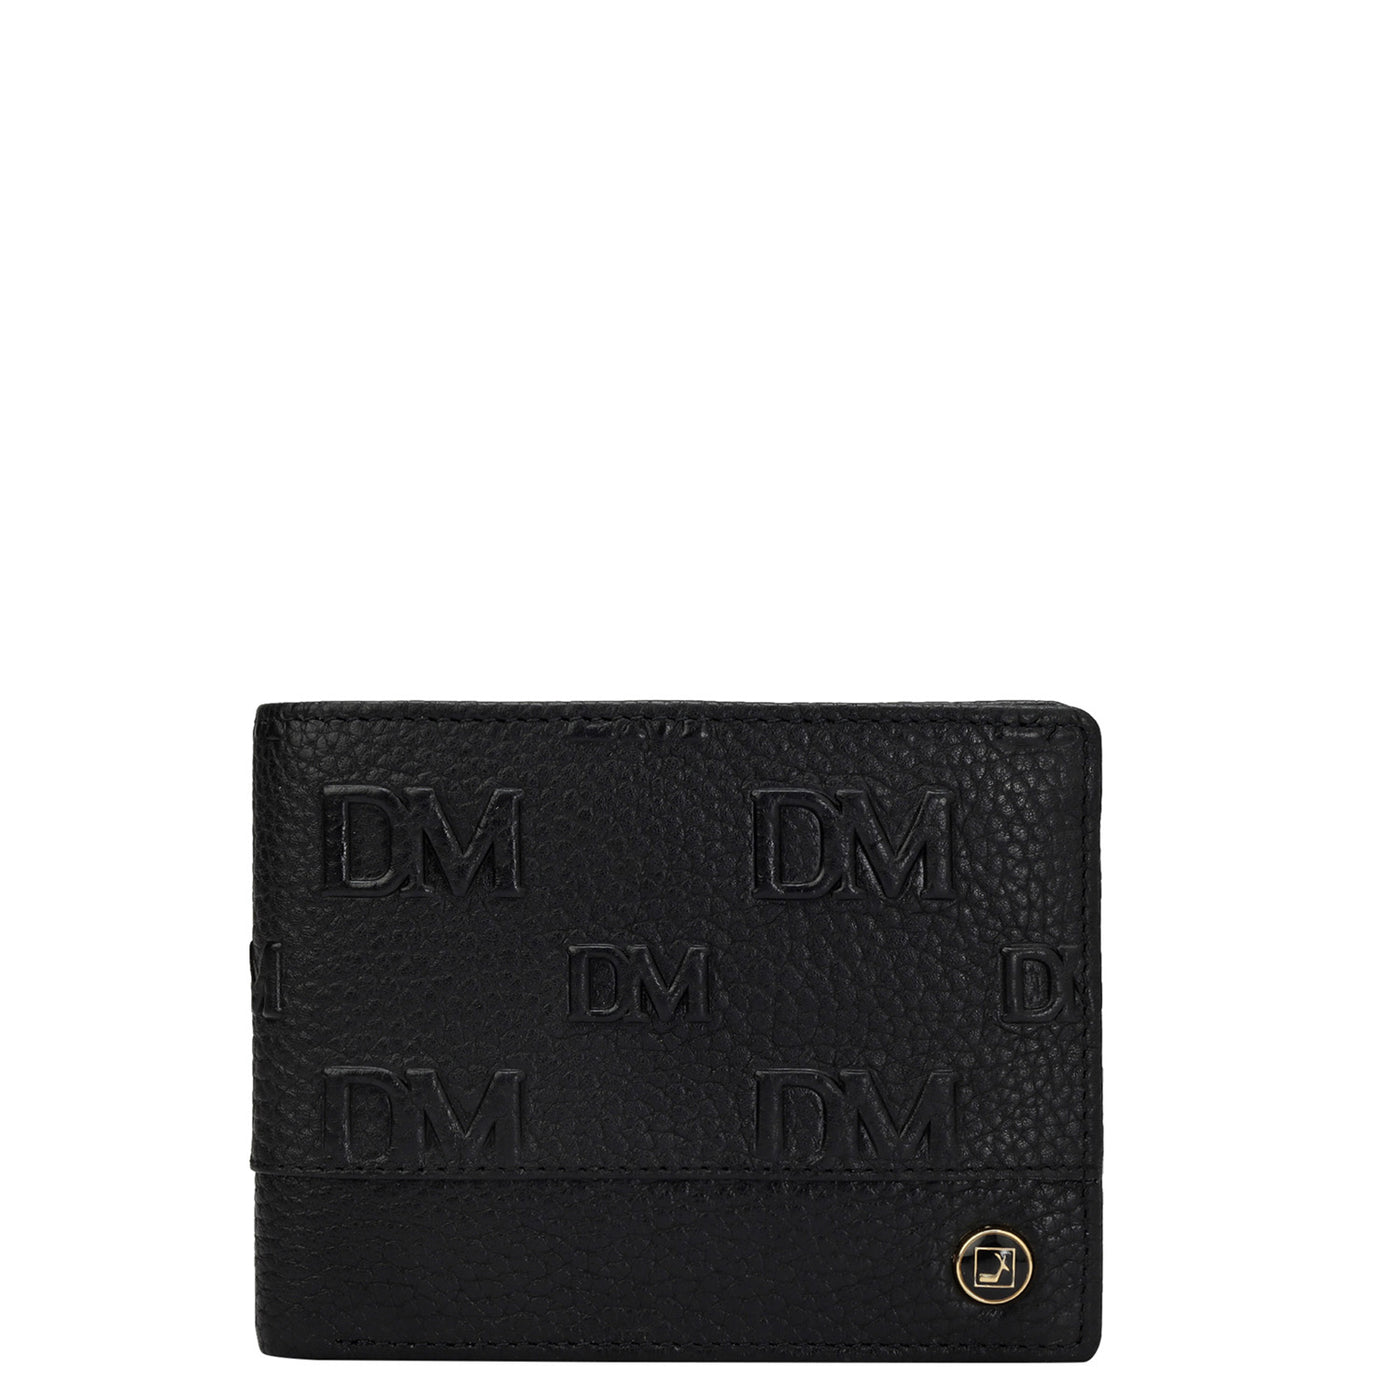 Monogram Wax Leather Mens Wallet - Black